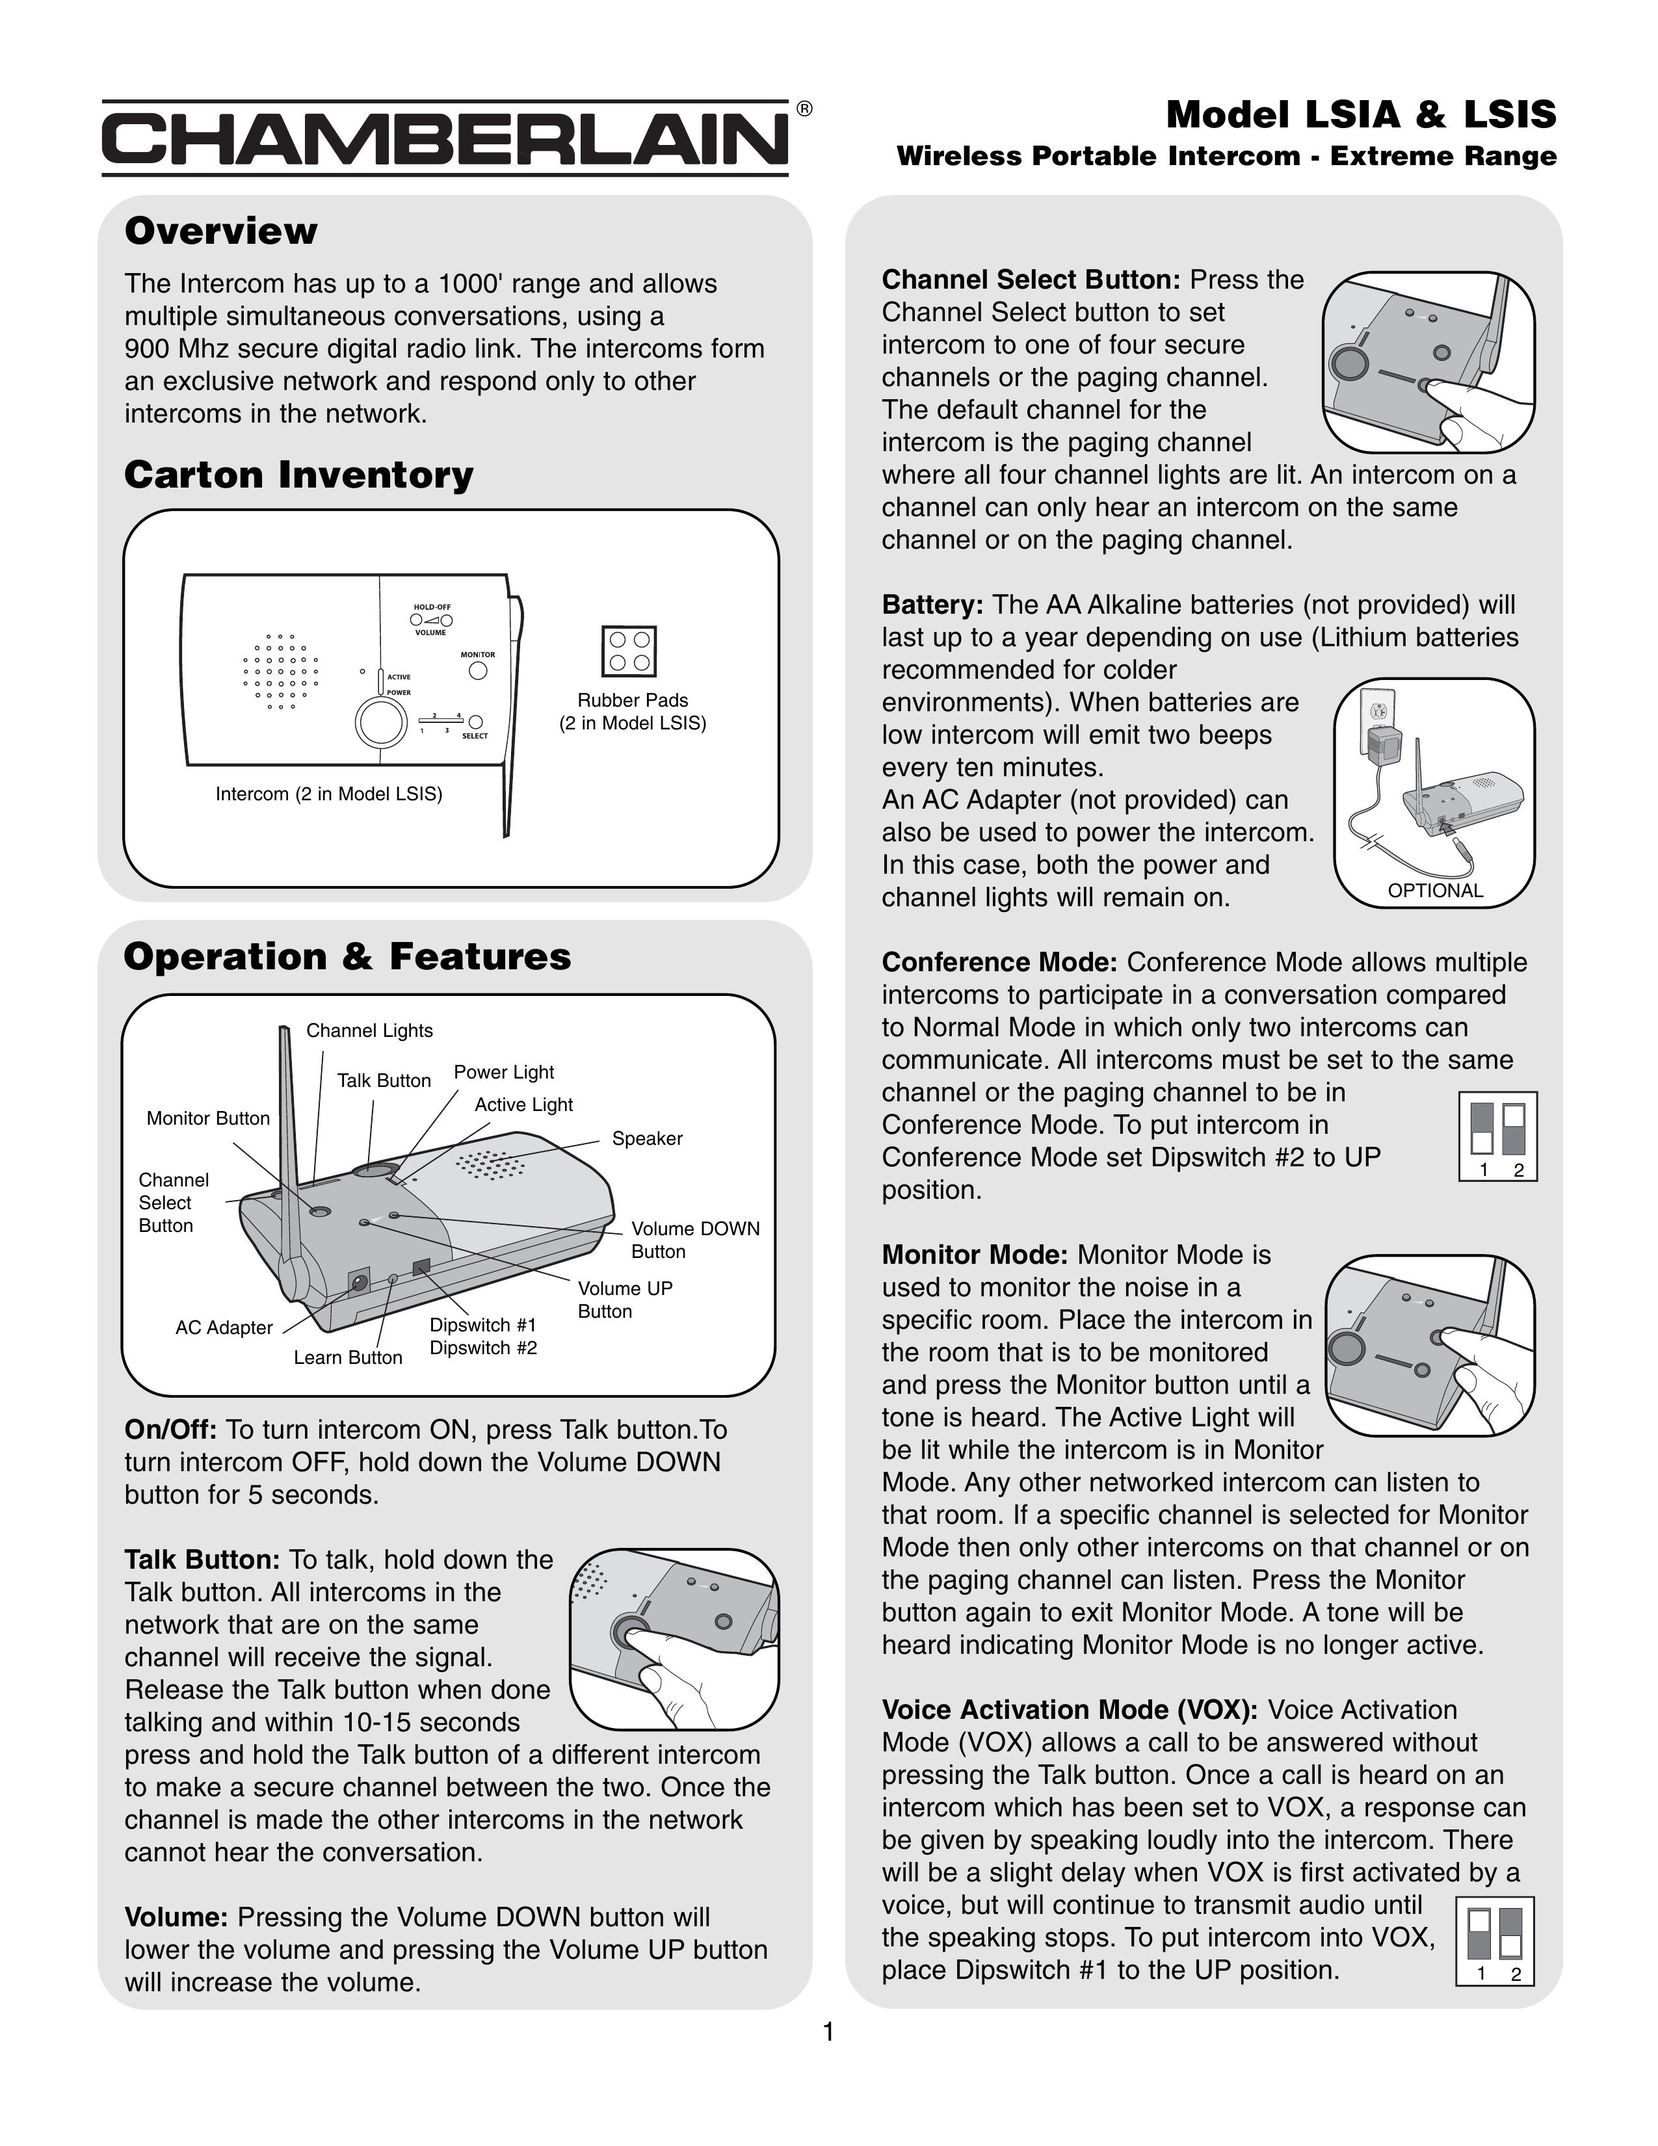 Chamberlain LSIA Intercom System User Manual